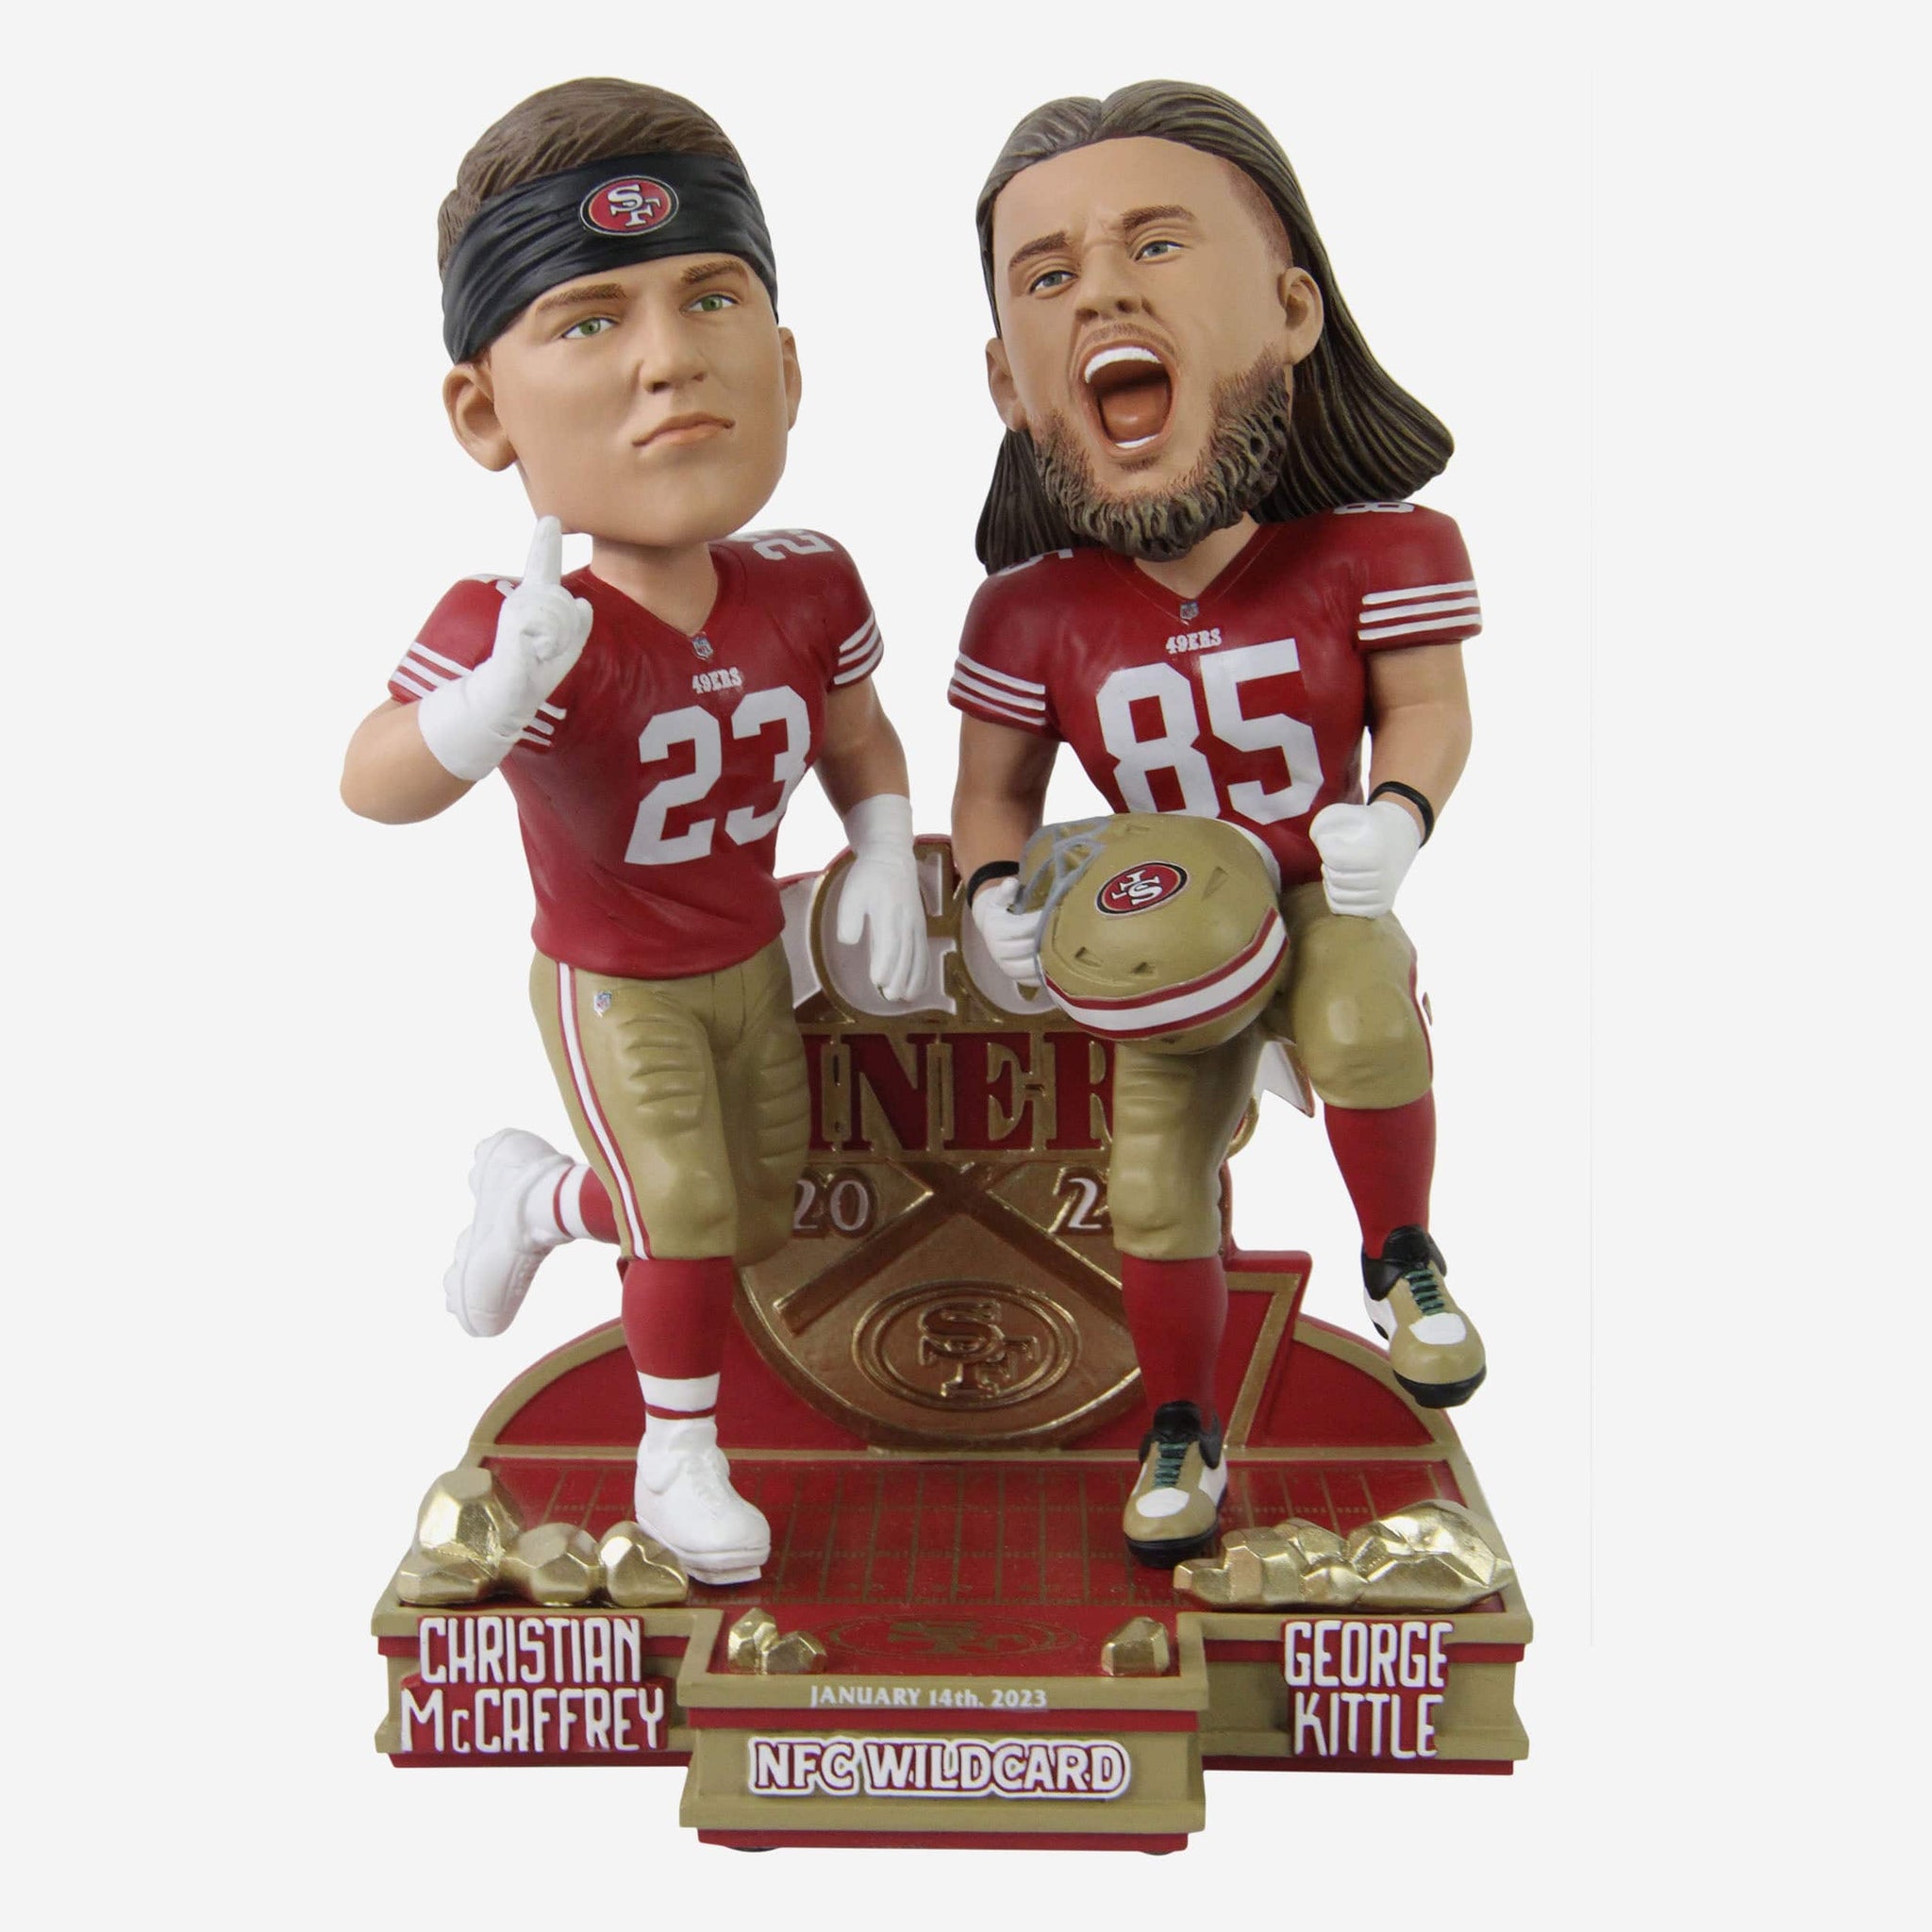 49ers NFL San Francisco Football Lovers Mug - Jolly Family Gifts